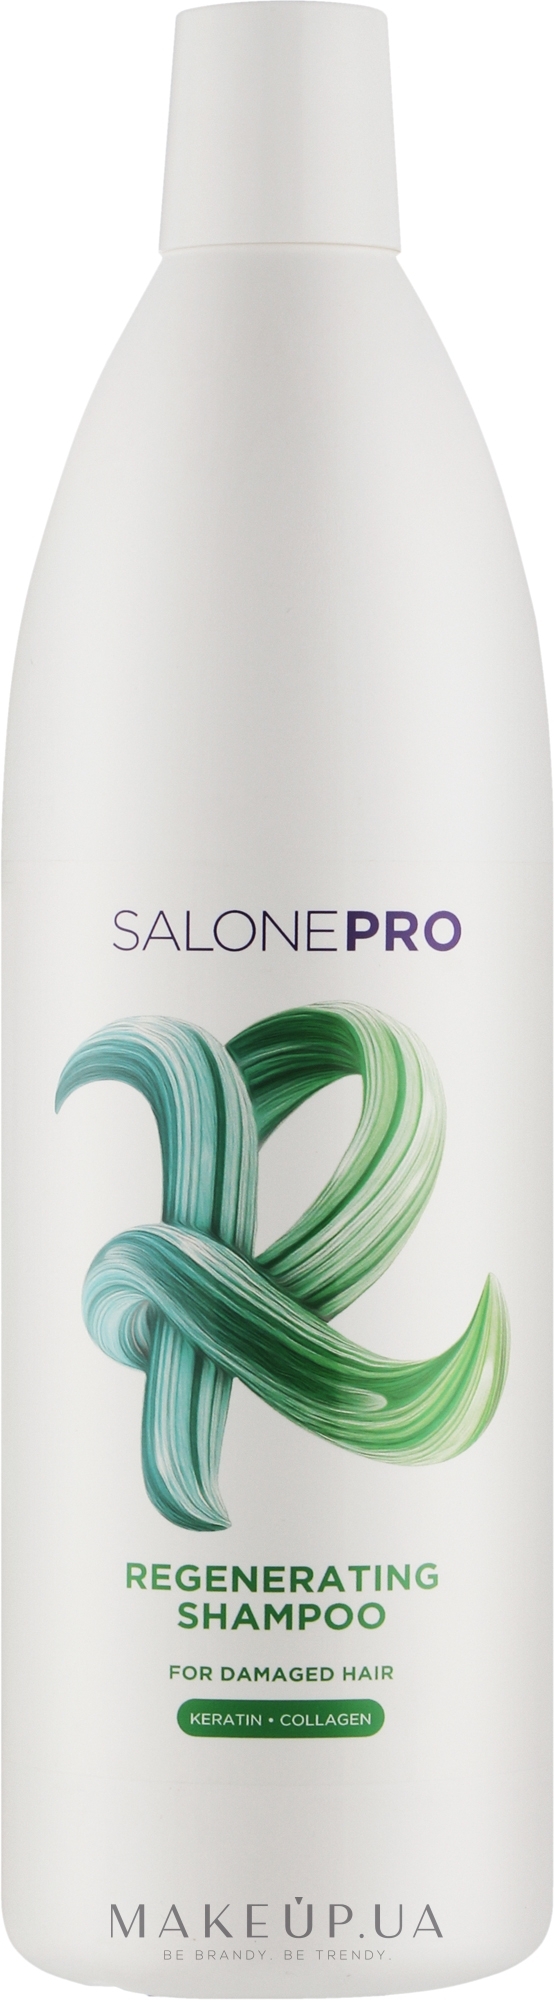 Восстанавливающий шампунь для поврежденных волос - Unic Salone Pro Regenerating Shampoo — фото 1000ml